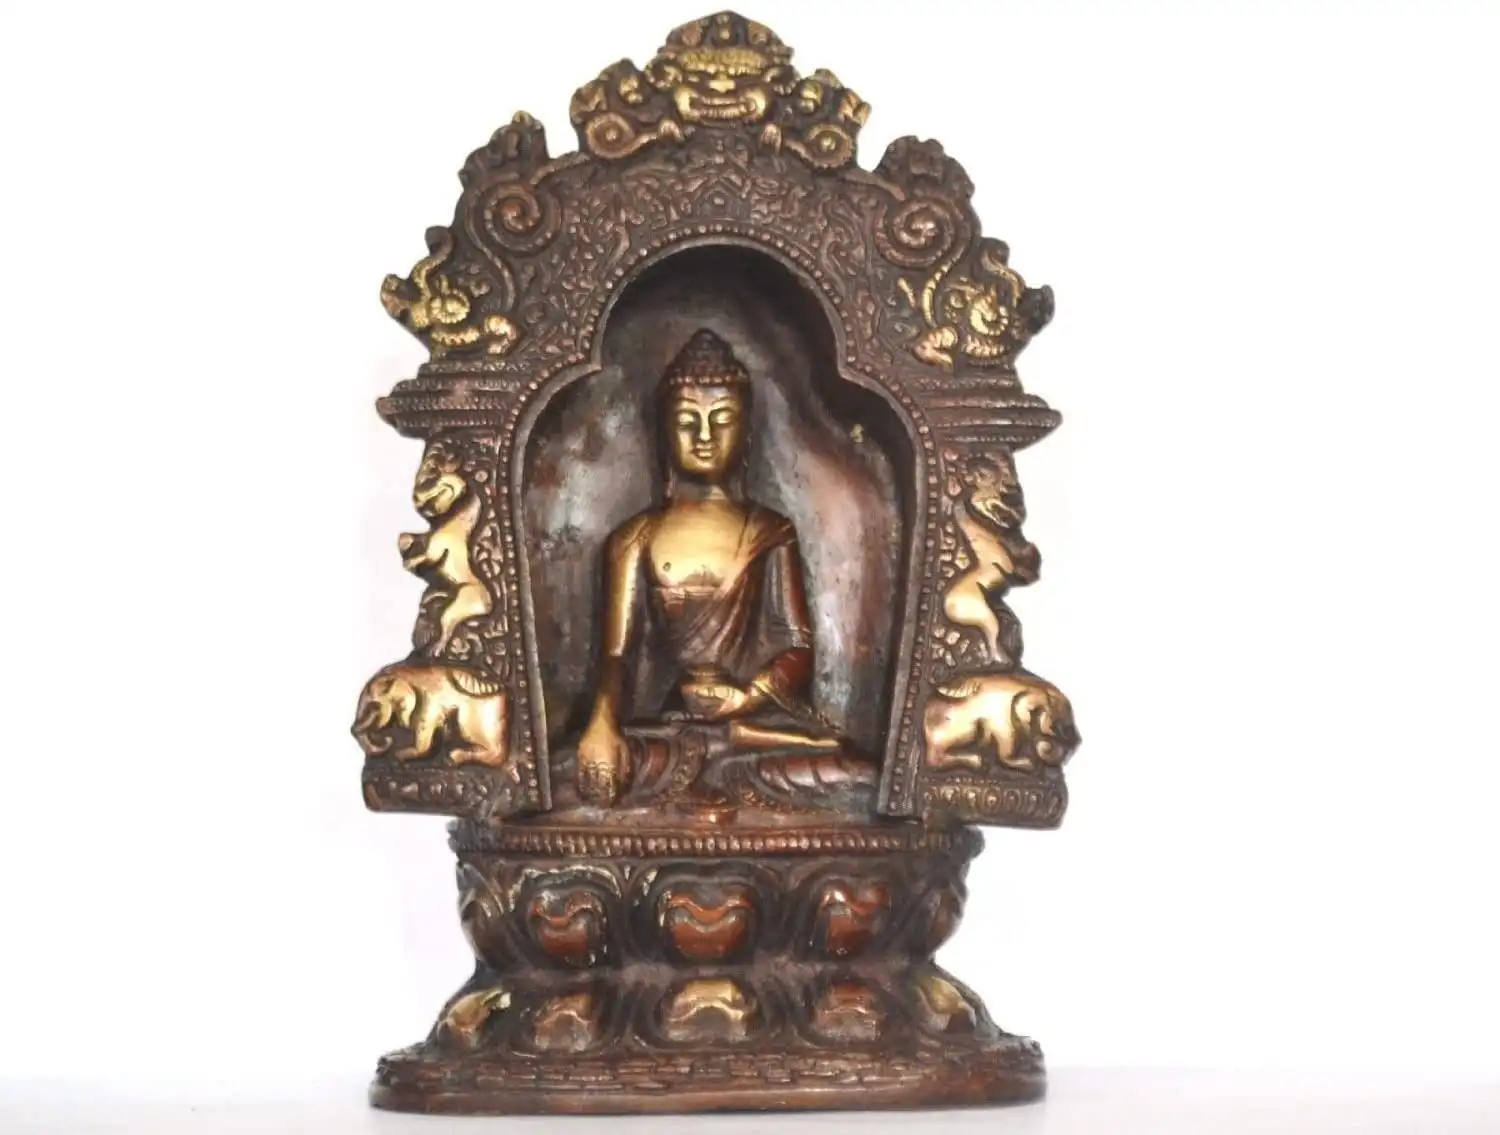 Meditating Buddha in Shrine Sculpture For Décor